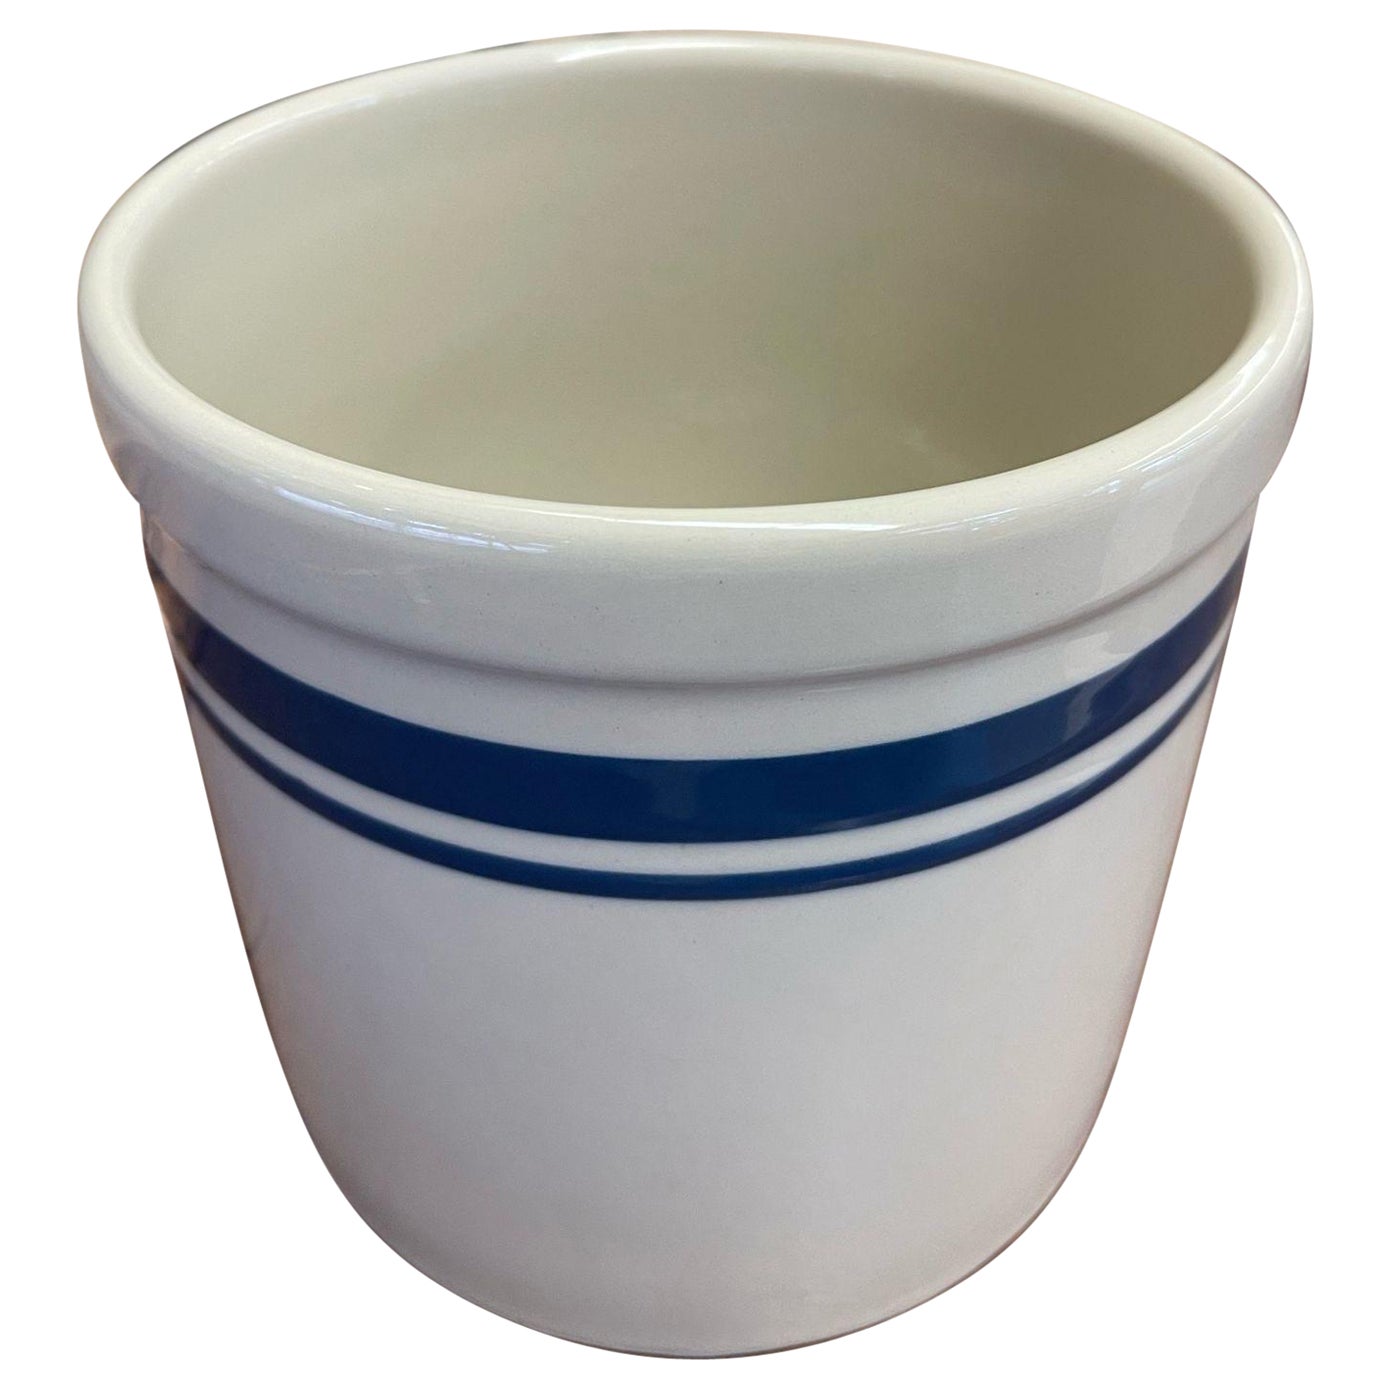 Vintage White and Blue Colored Ceramic Jar.